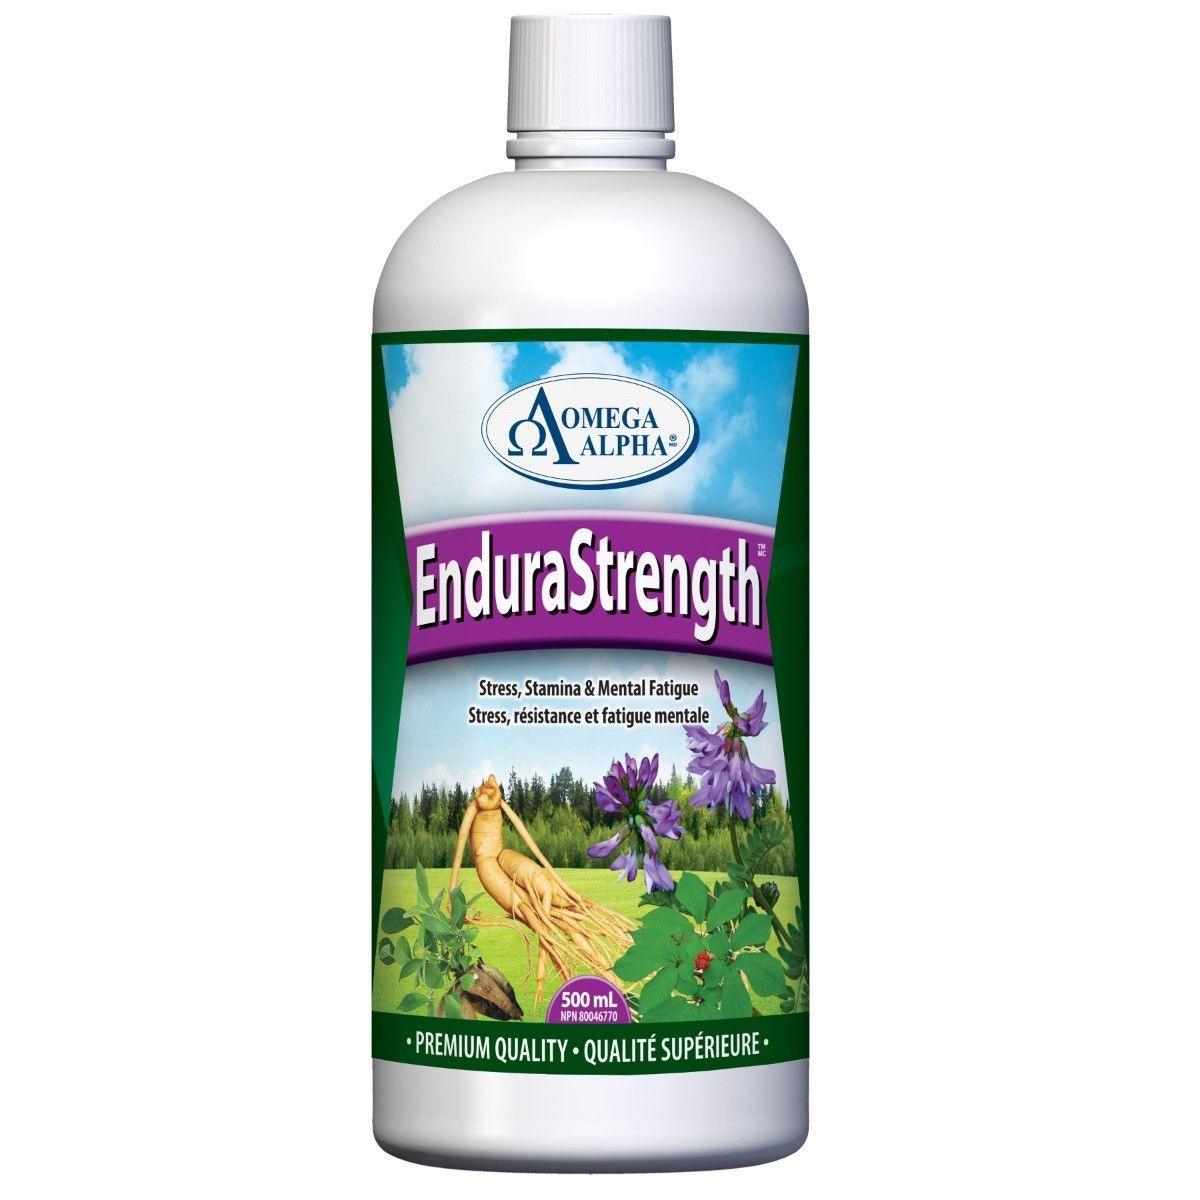 Omega Alpha EnduraStrength 500mL Supplements at Village Vitamin Store